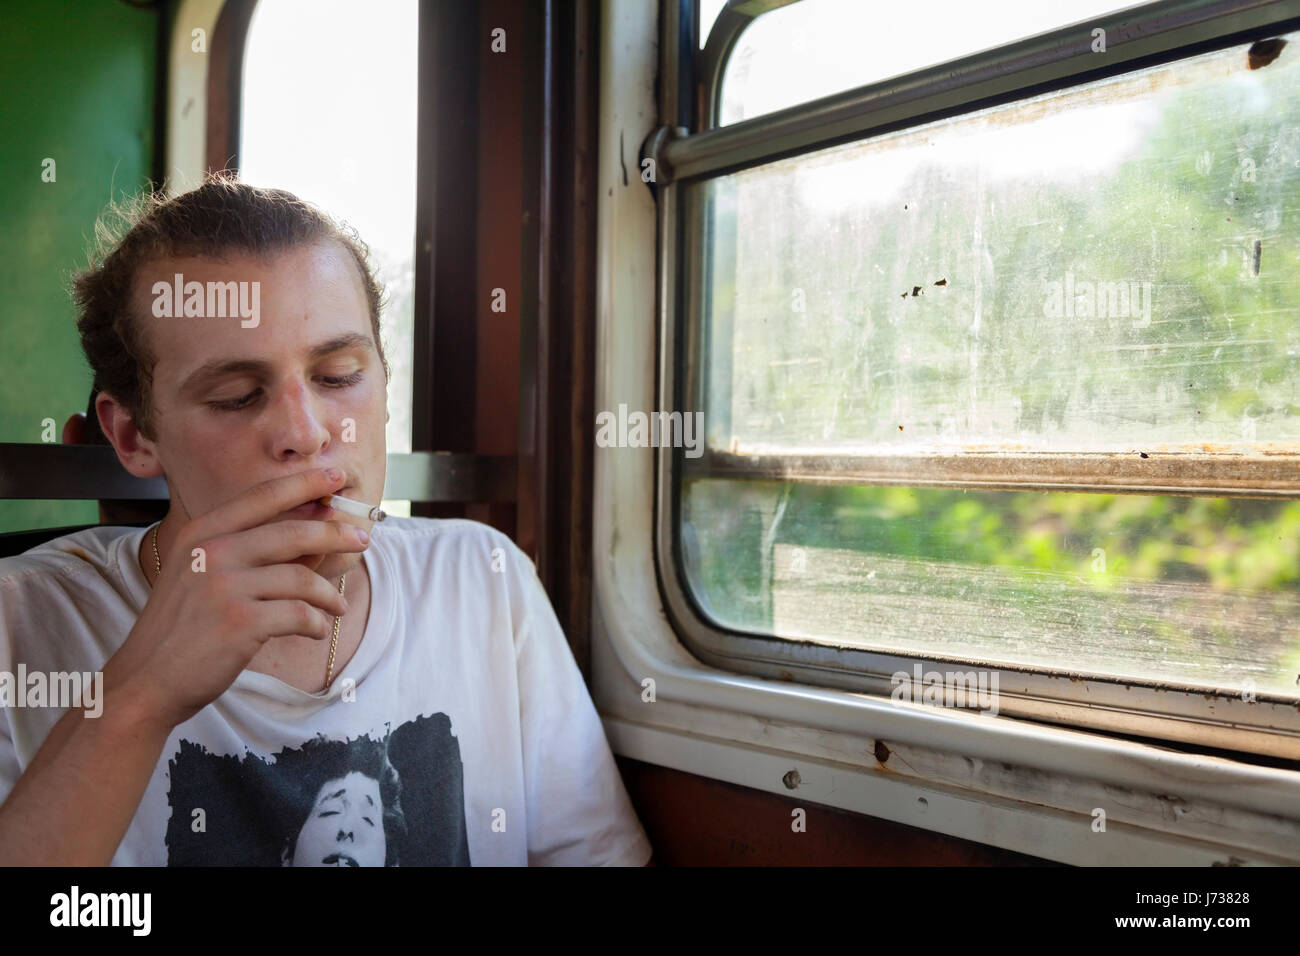 A person smoking a cigarette on a train in Cuba. Stock Photo